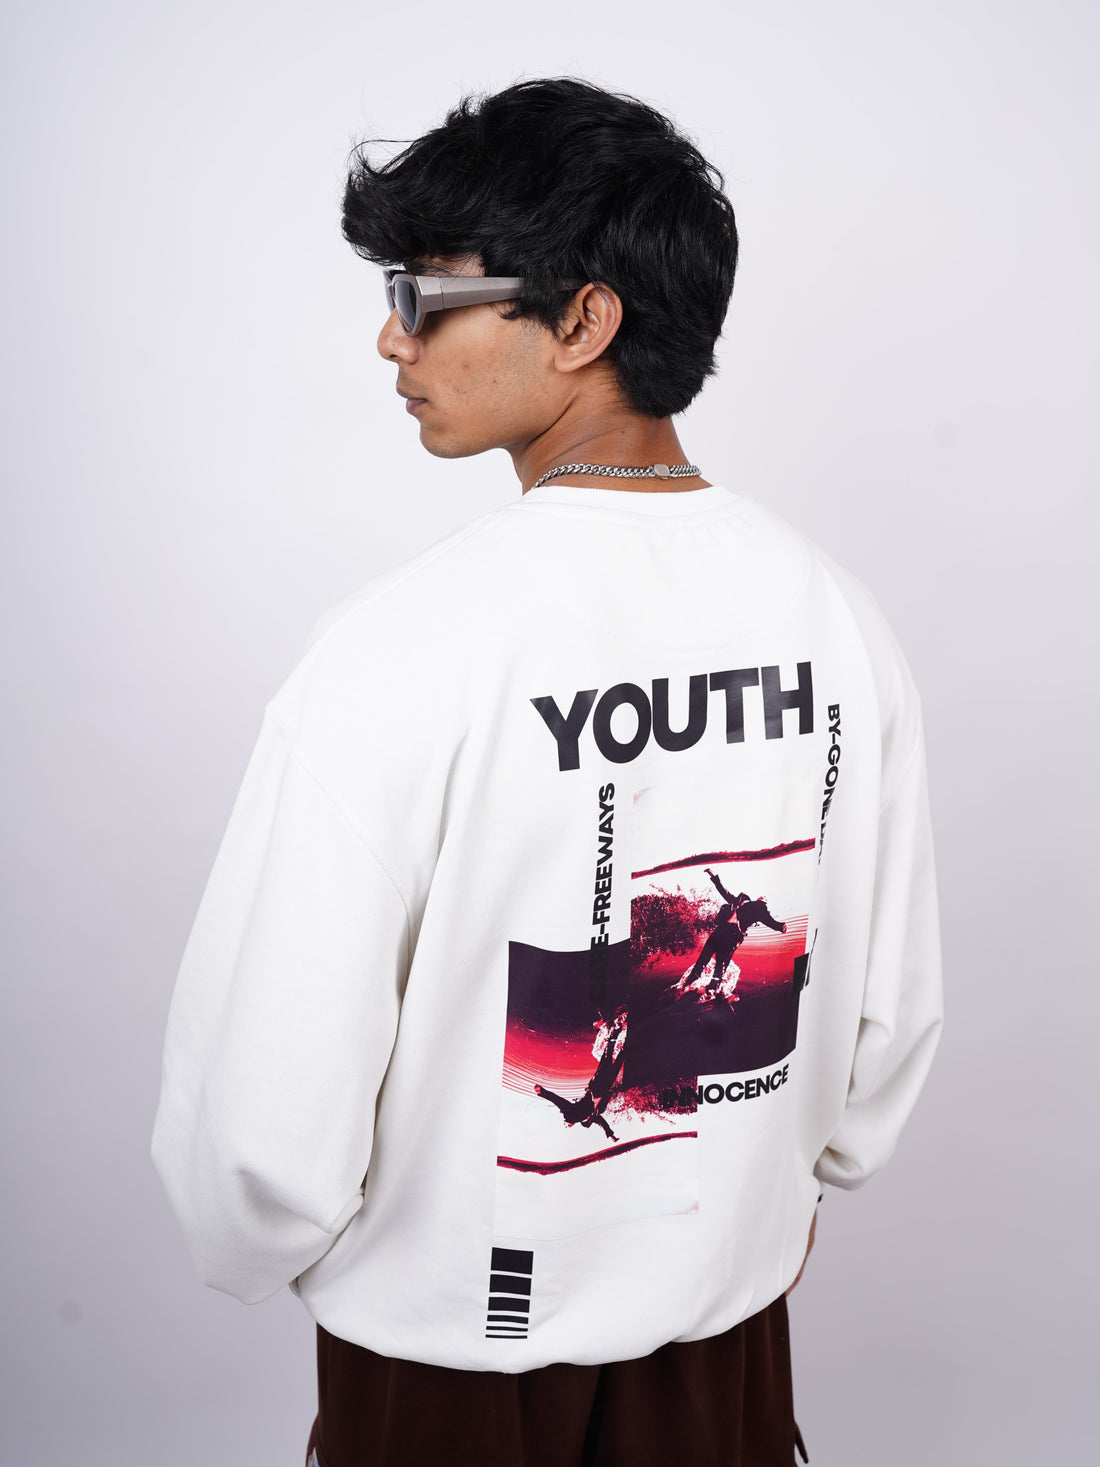 Youth - Heavyweight Baggy Sweatshirt For Men And Women